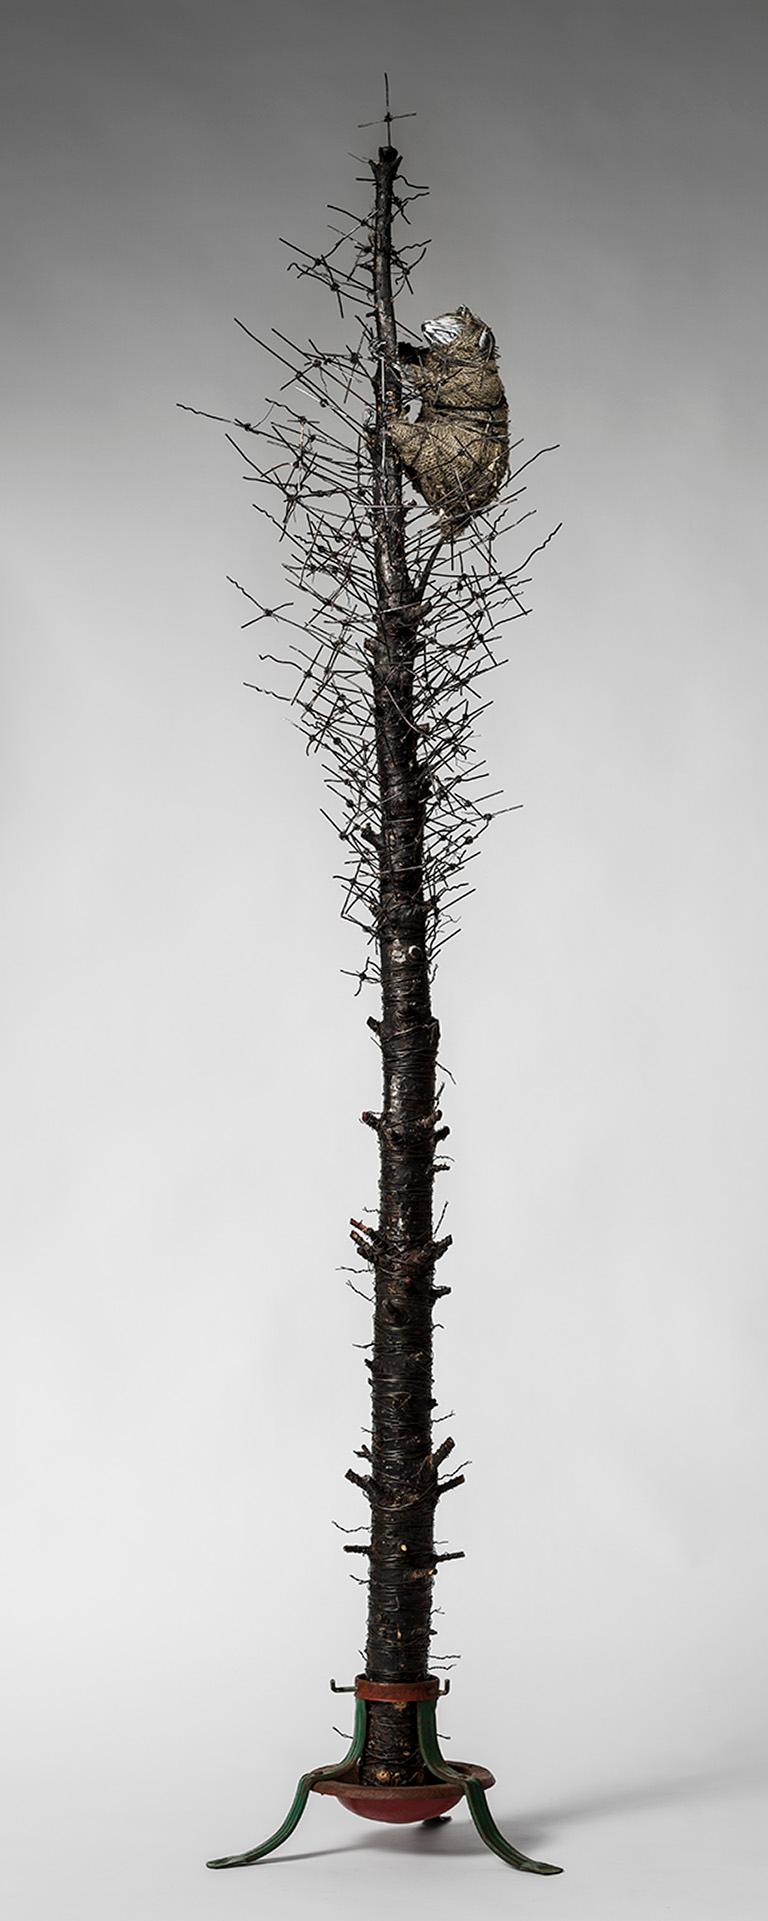 Tall Tree sculpture with wire & creature: 'O' Tannenbaum' - Mixed Media Art by Elizabeth Jordan